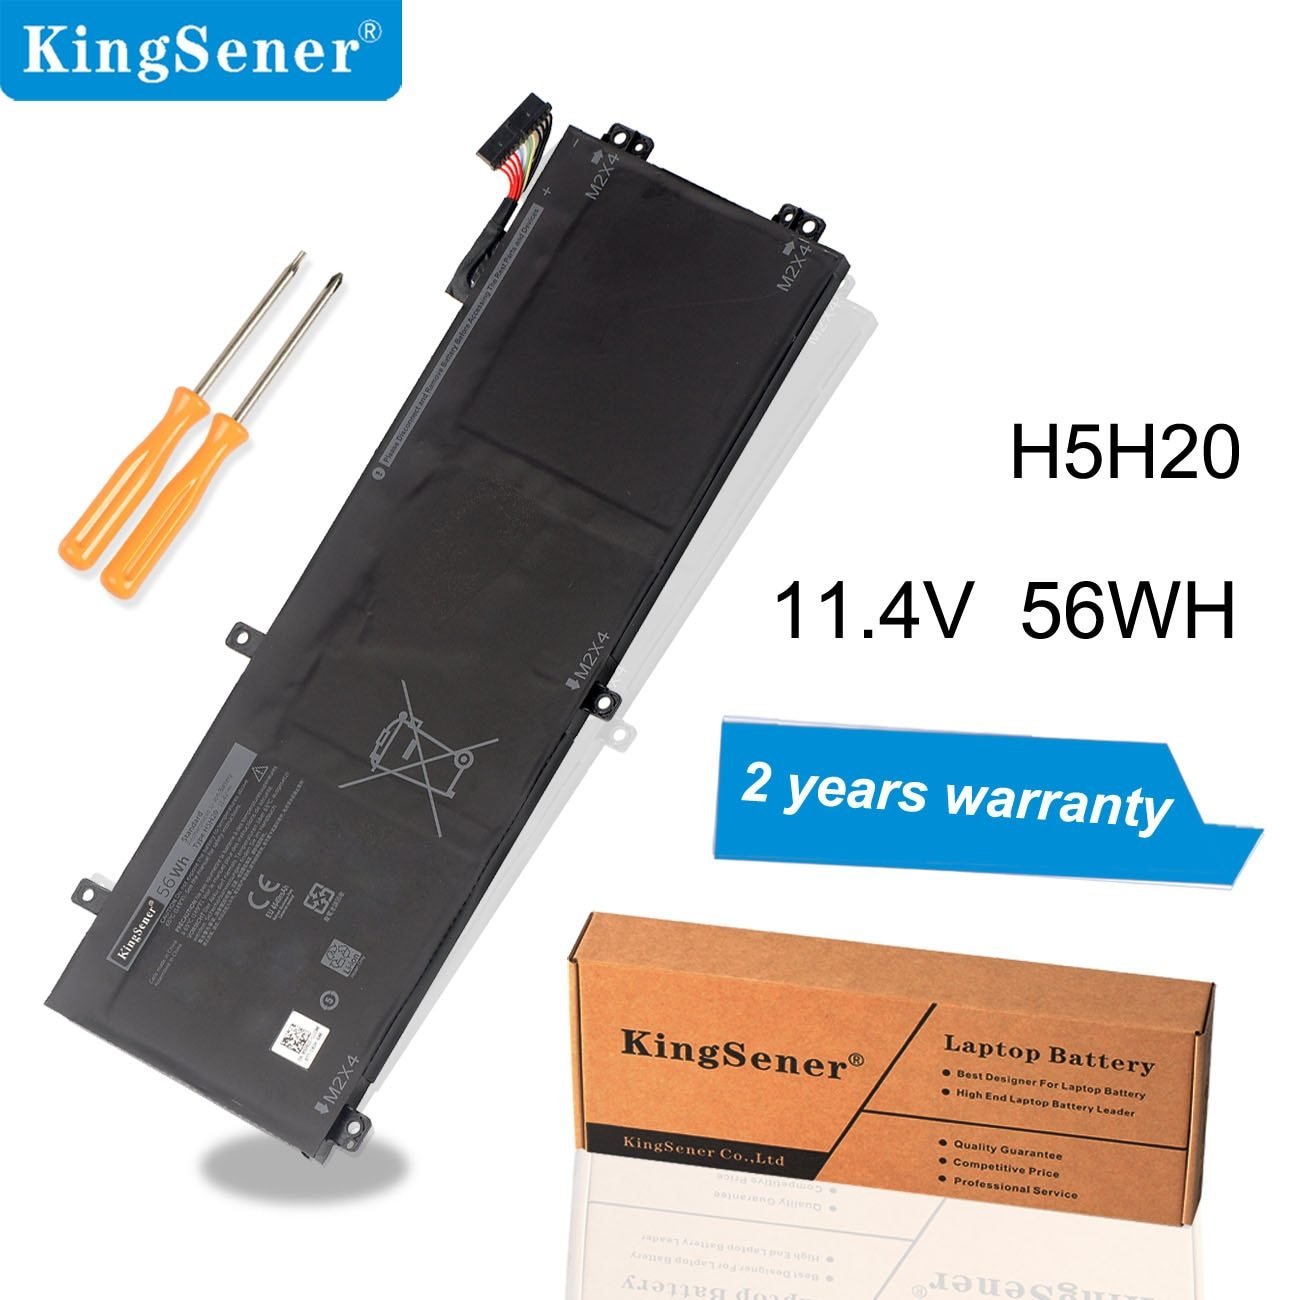 Kingsener H5H20 Laptop Battery For DELL XPS 15 9560 9570 15-9560-D1845 Precision M5520 5530 62MJV M7R96 05041C 5D91C 11.4V 56Wh GreatEagleInc